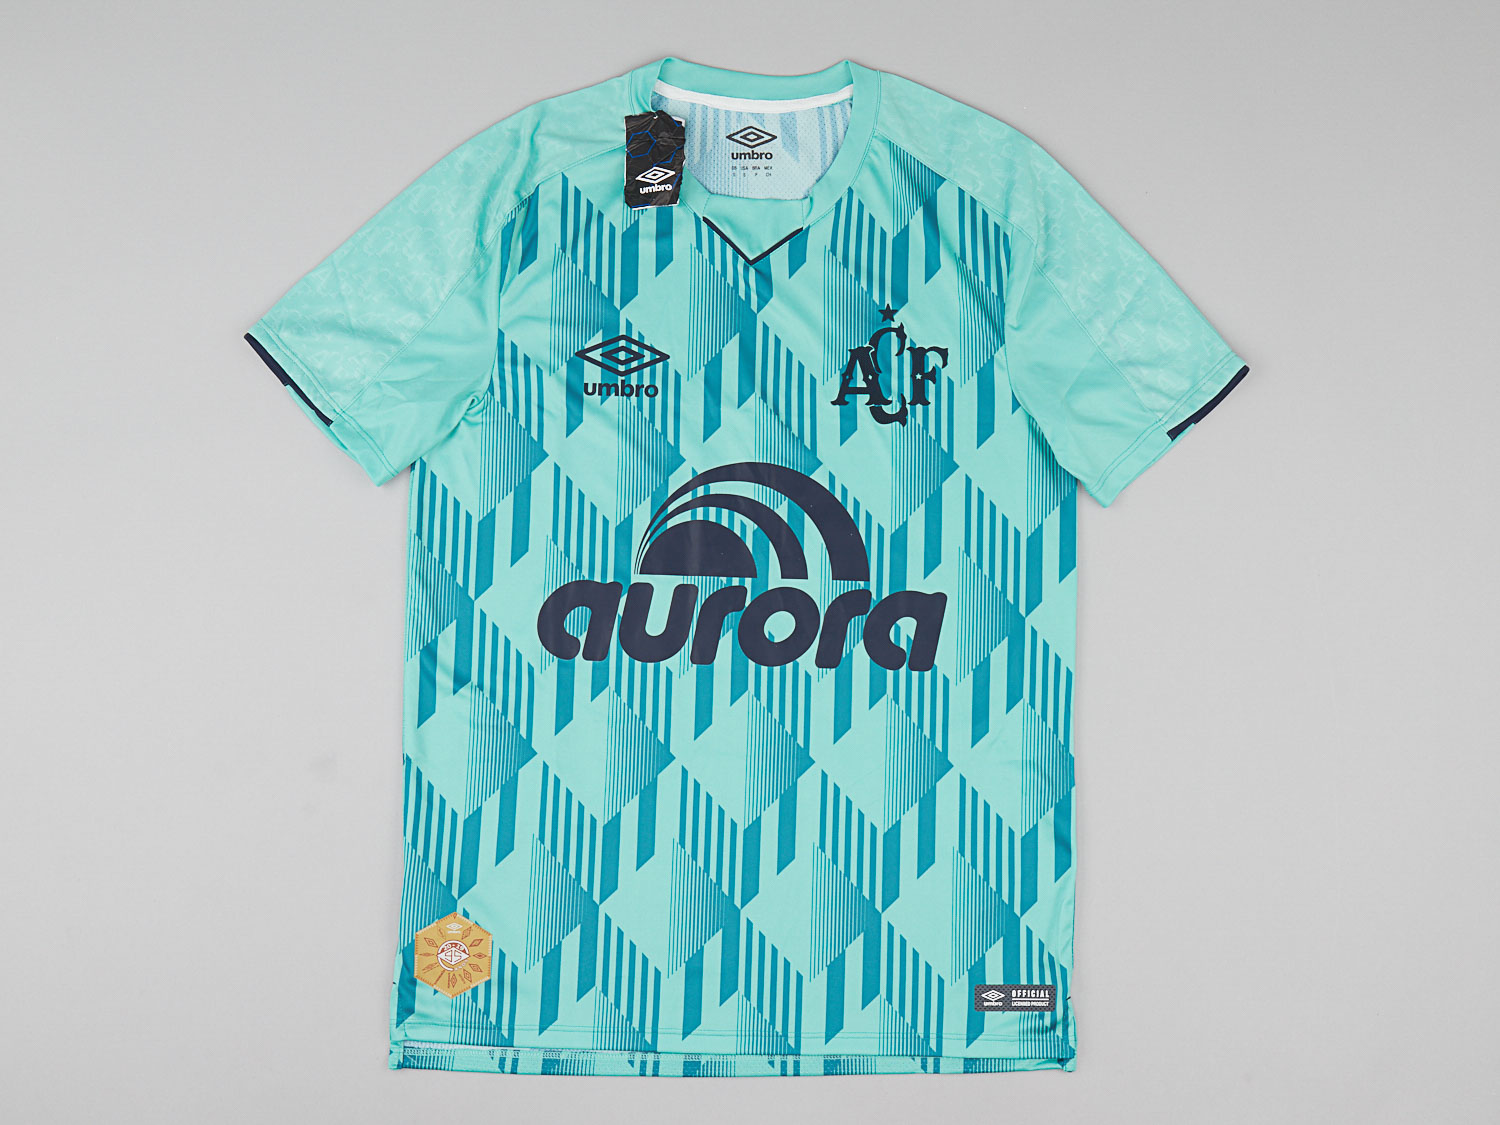 Chapecoense Away football shirt 2015 - 2016. Sponsored by Caixa